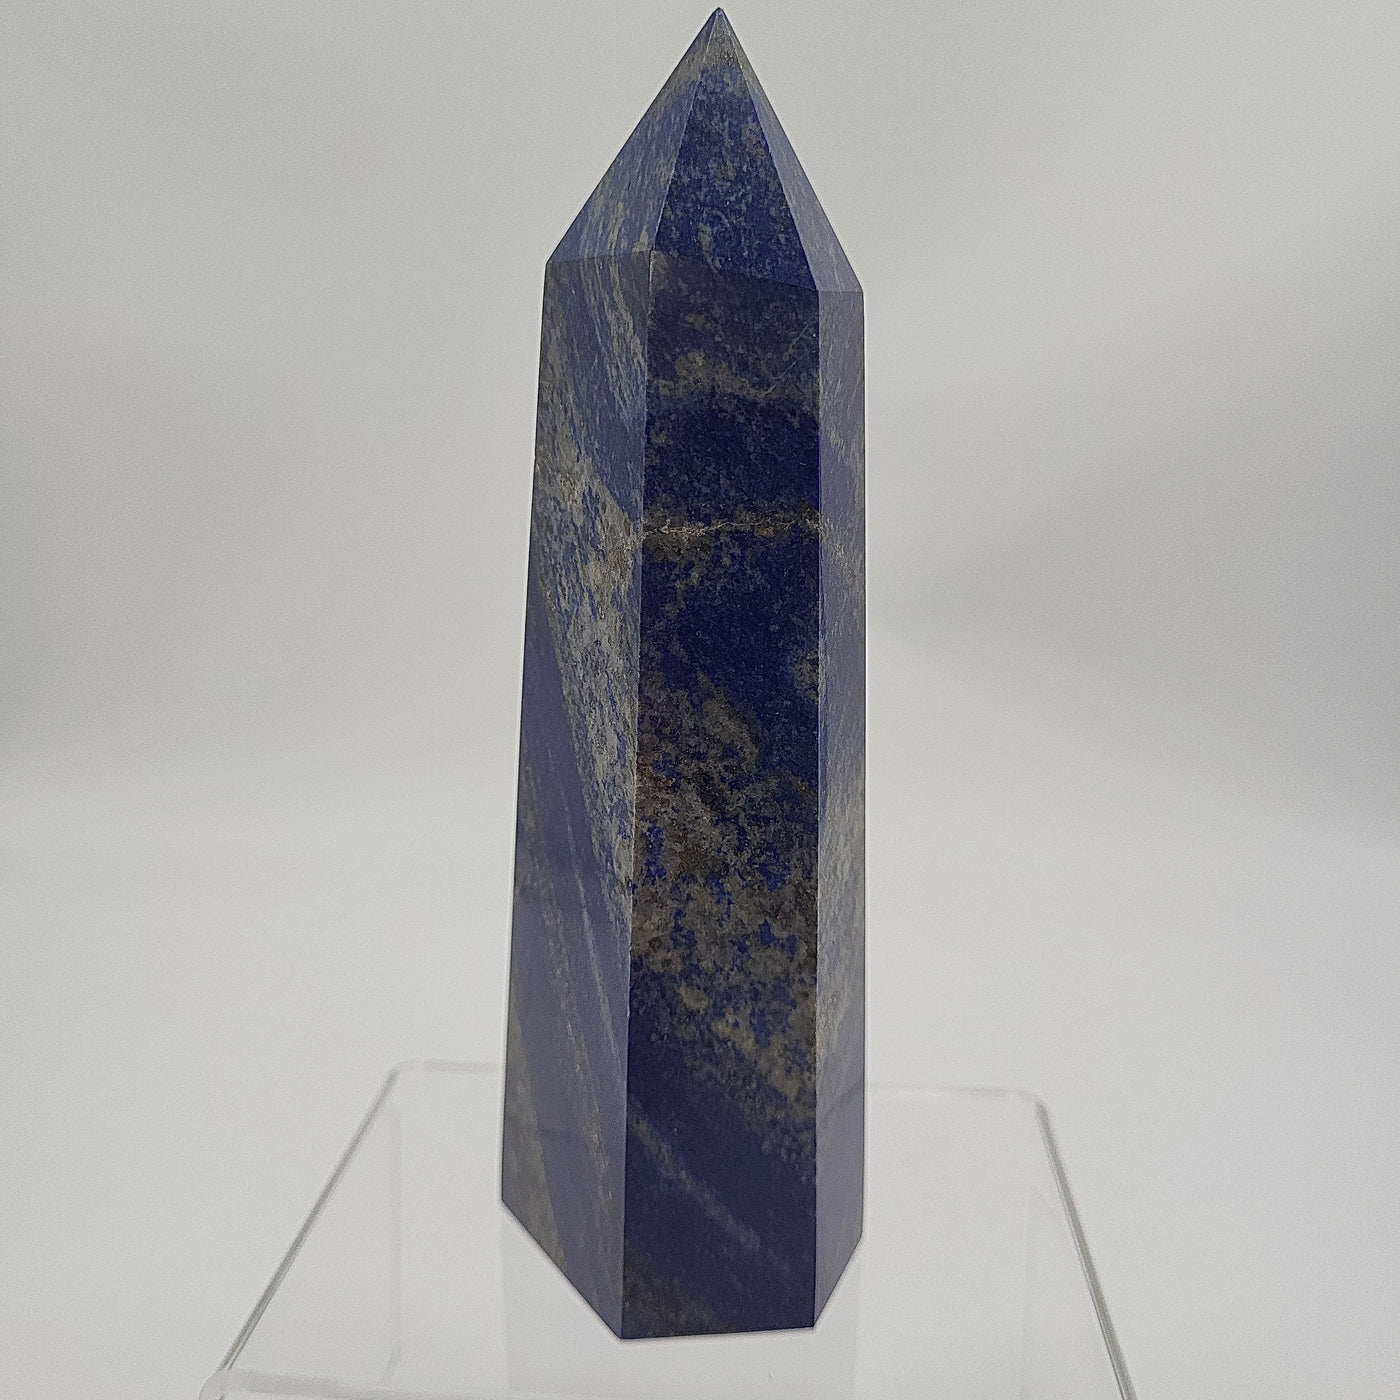 5.75" Lapis Lazuli Tower